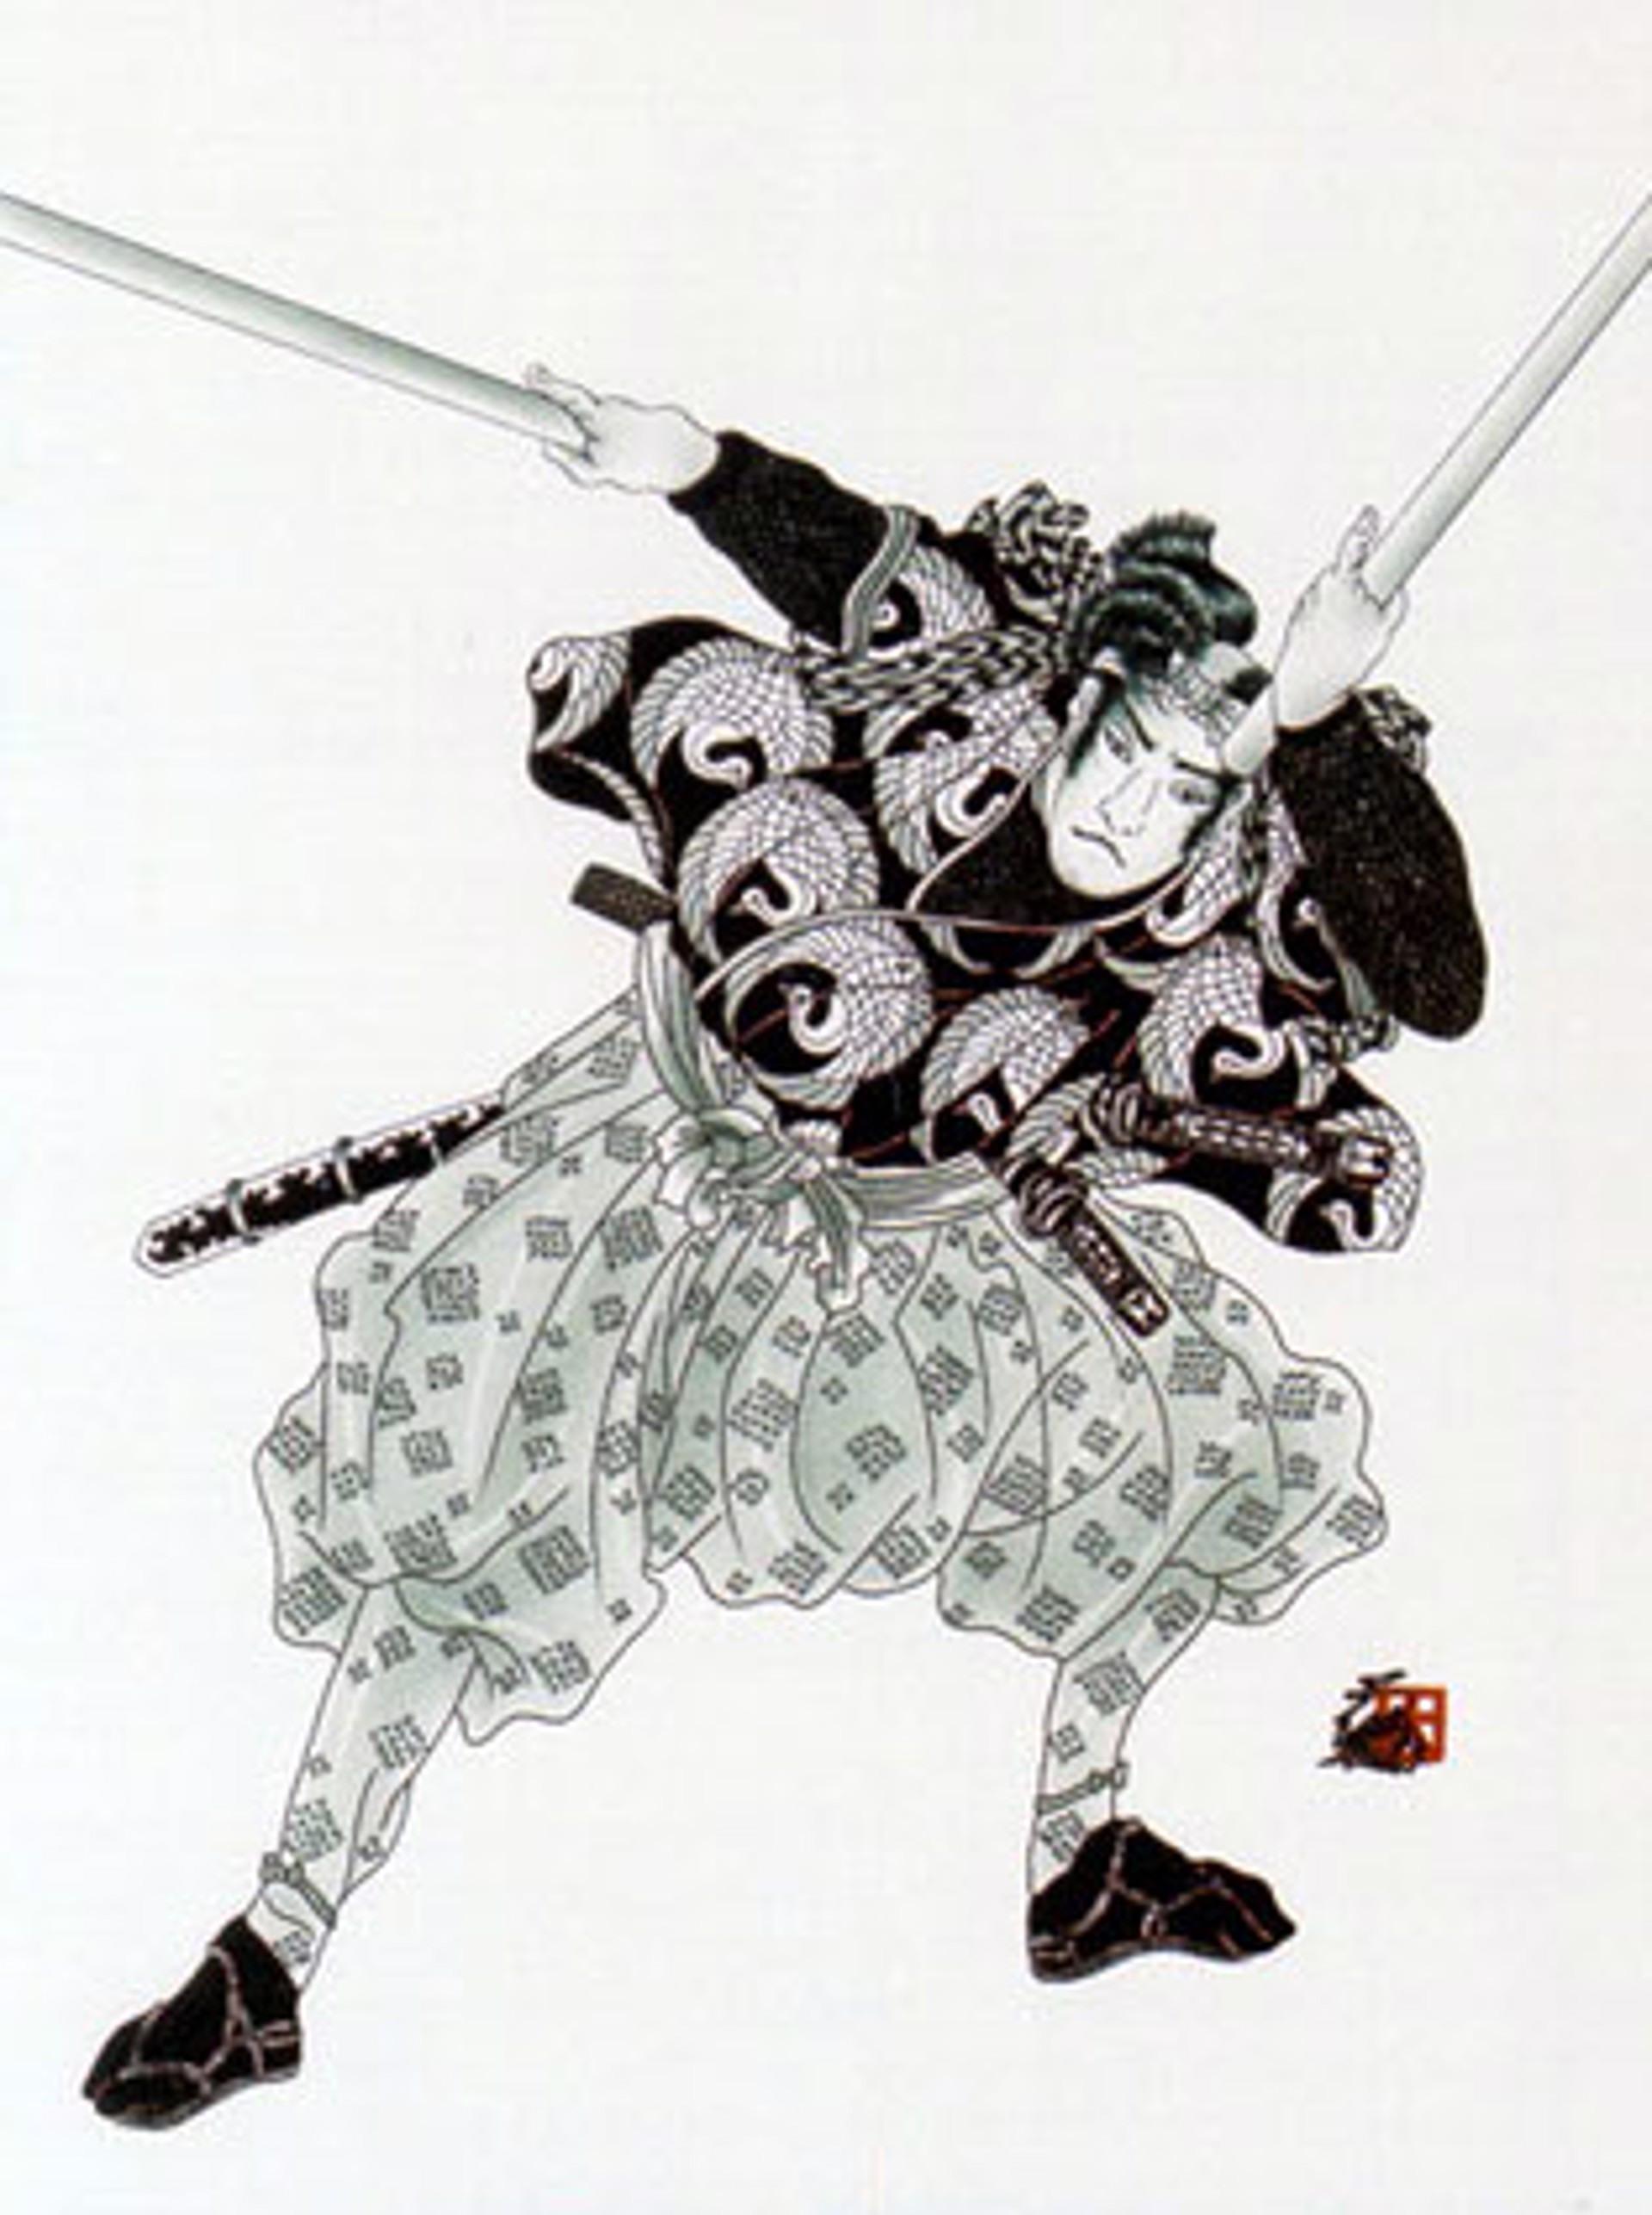 Musashi 1 (With Cranes) by Hisashi Otsuka